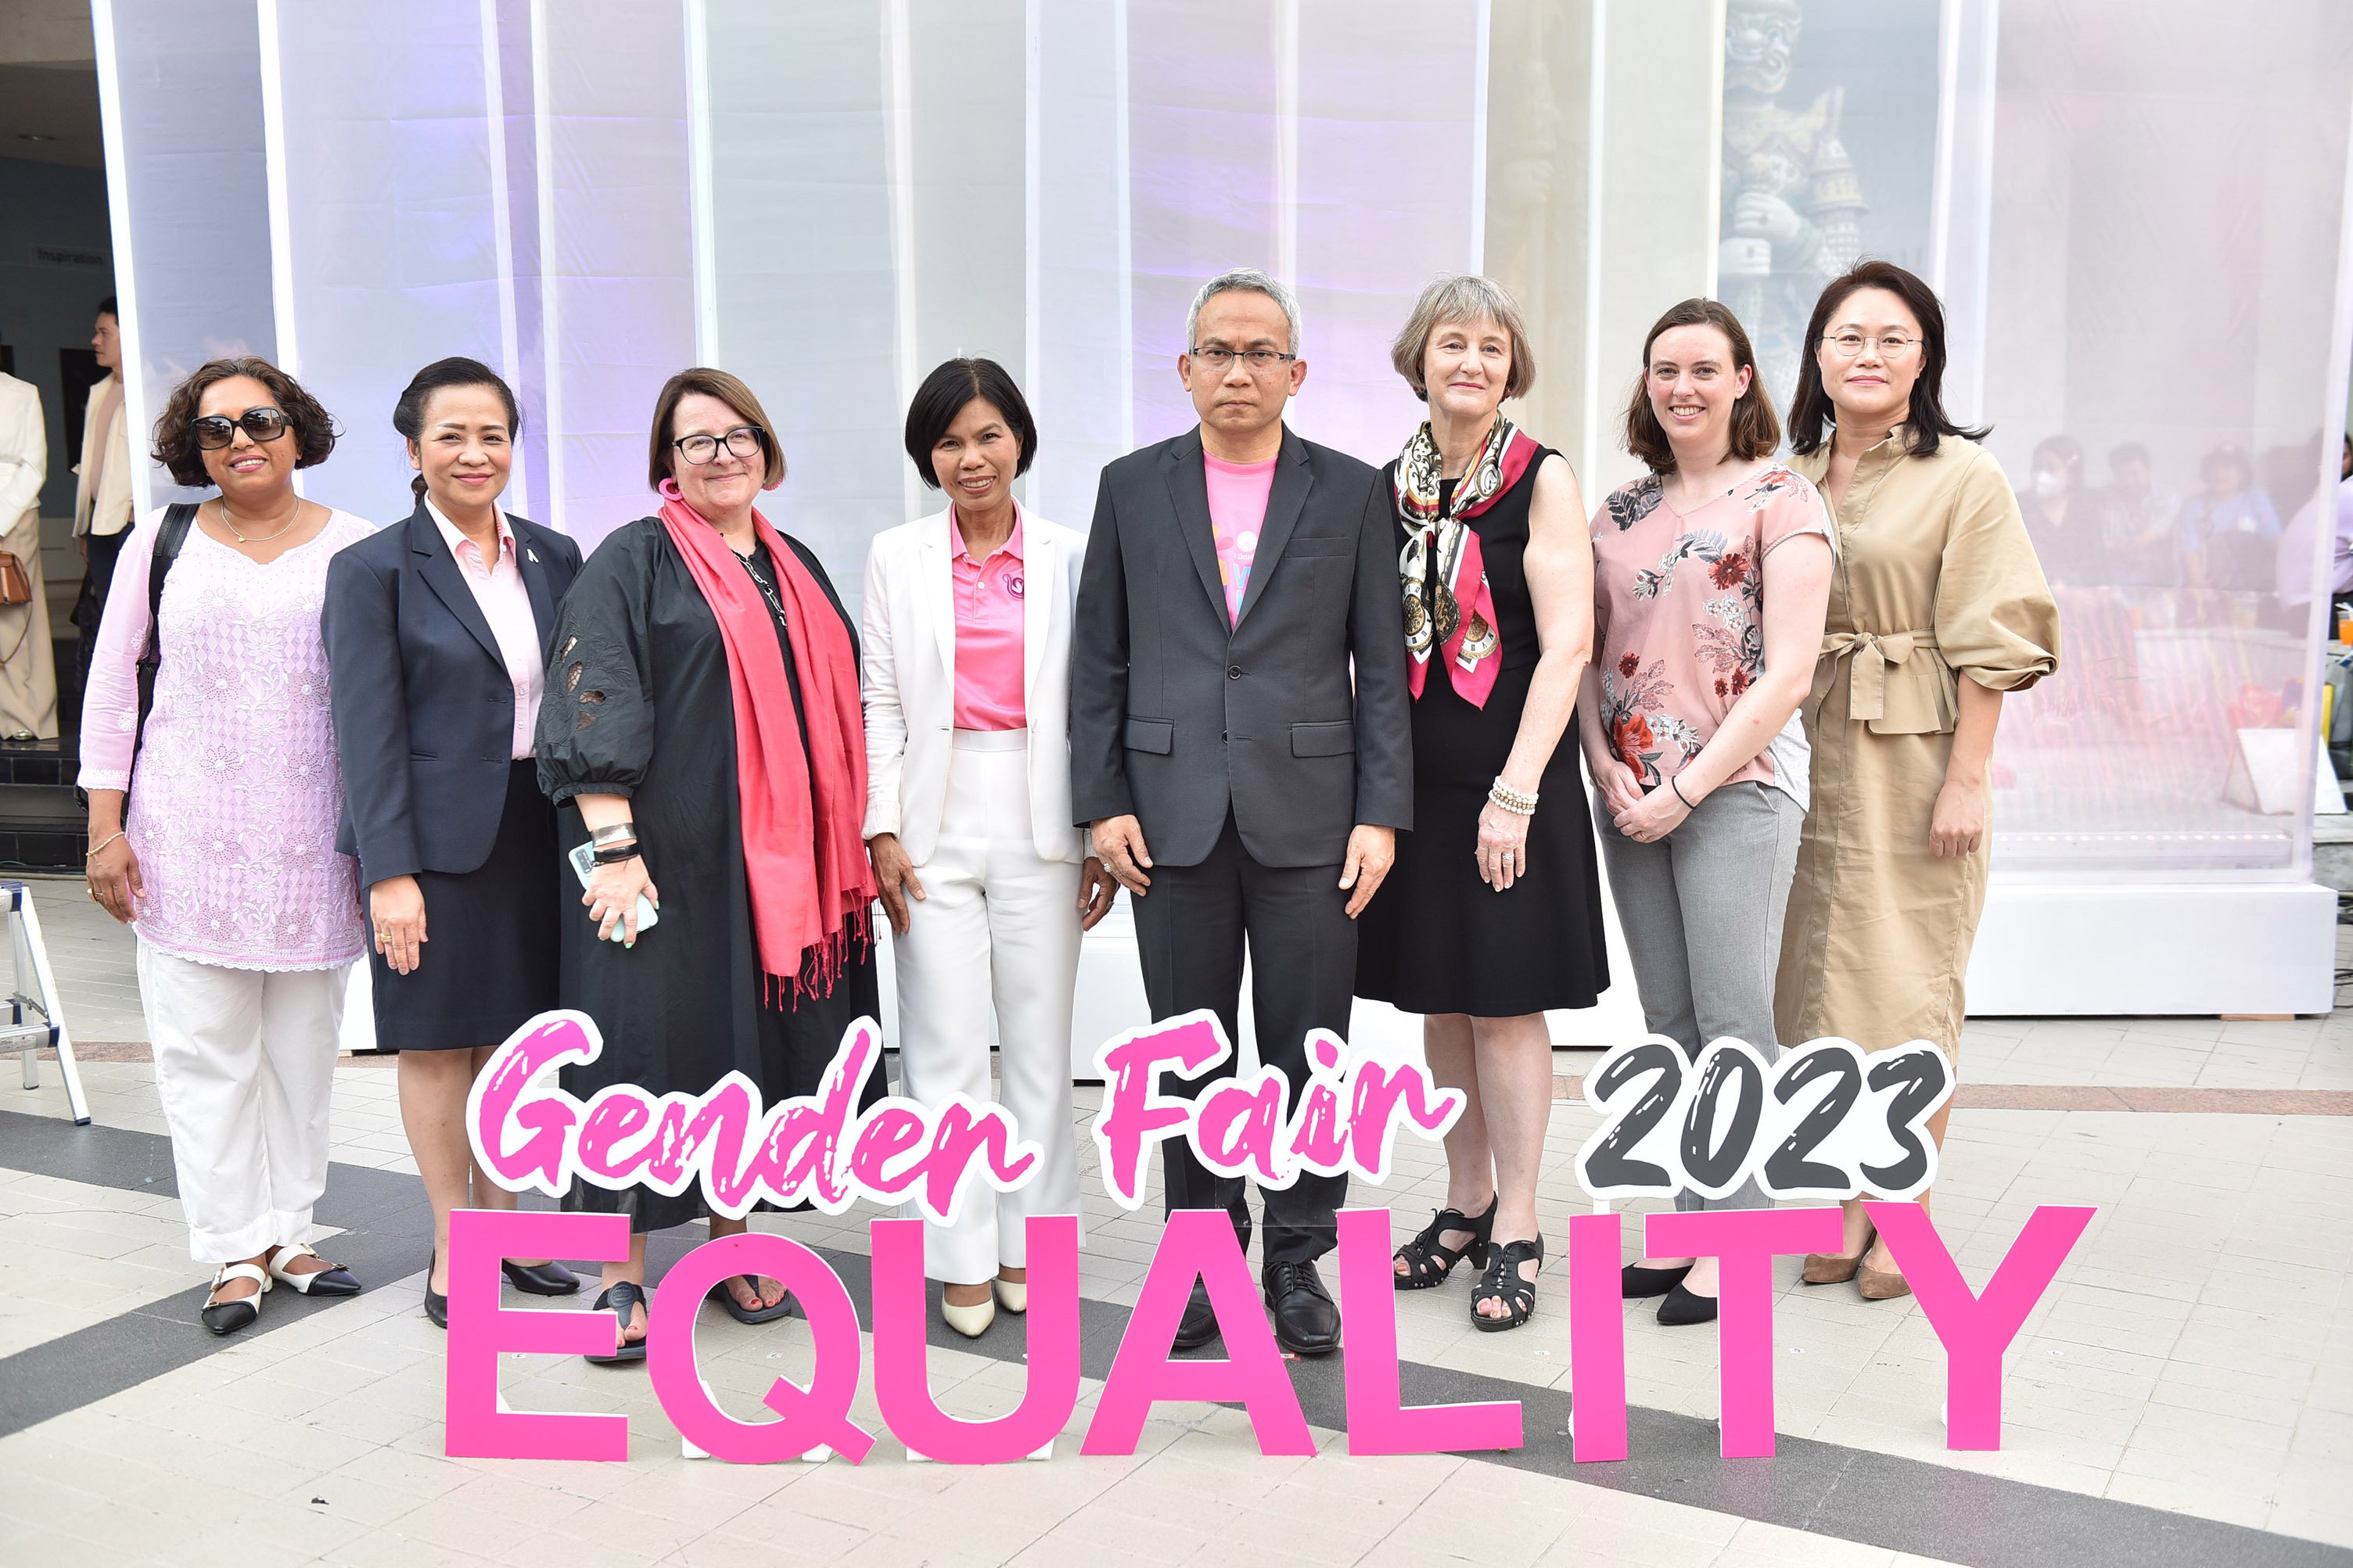 Gender Fair 2023